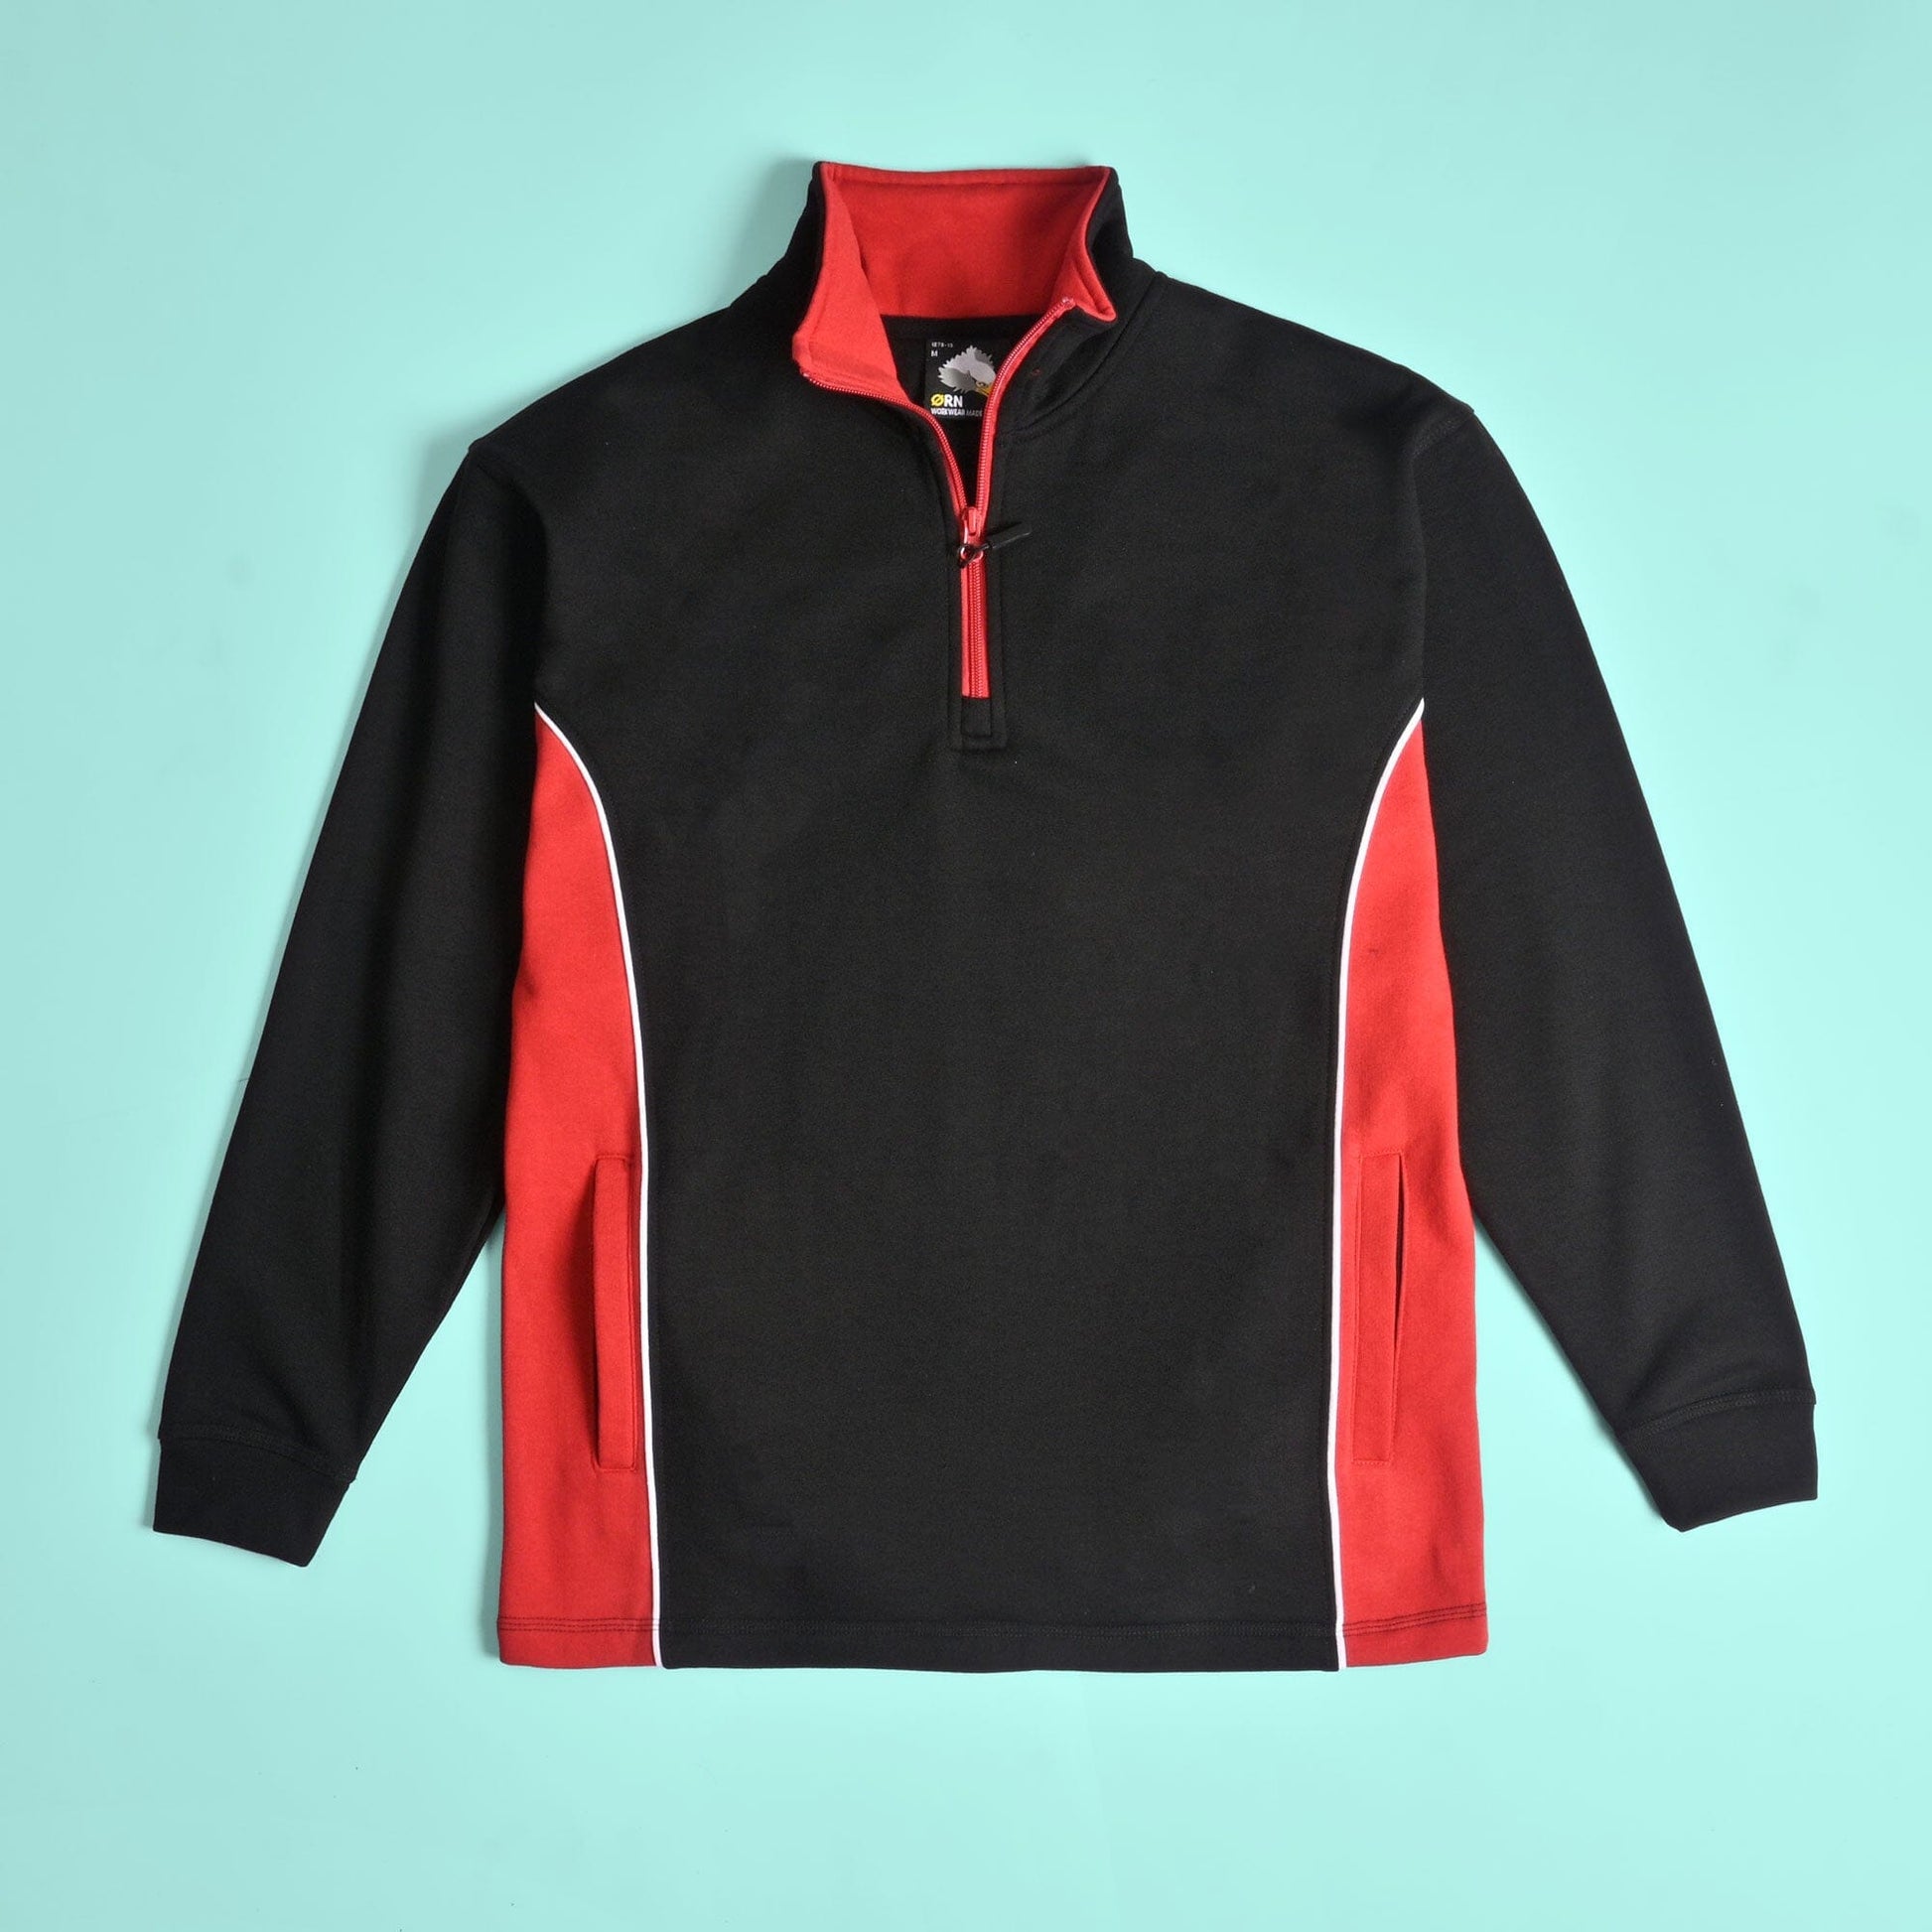 Men's Contrast Panels Quarter Zipper Fleece Sweat Shirt Minor Fault Image Black Red XS